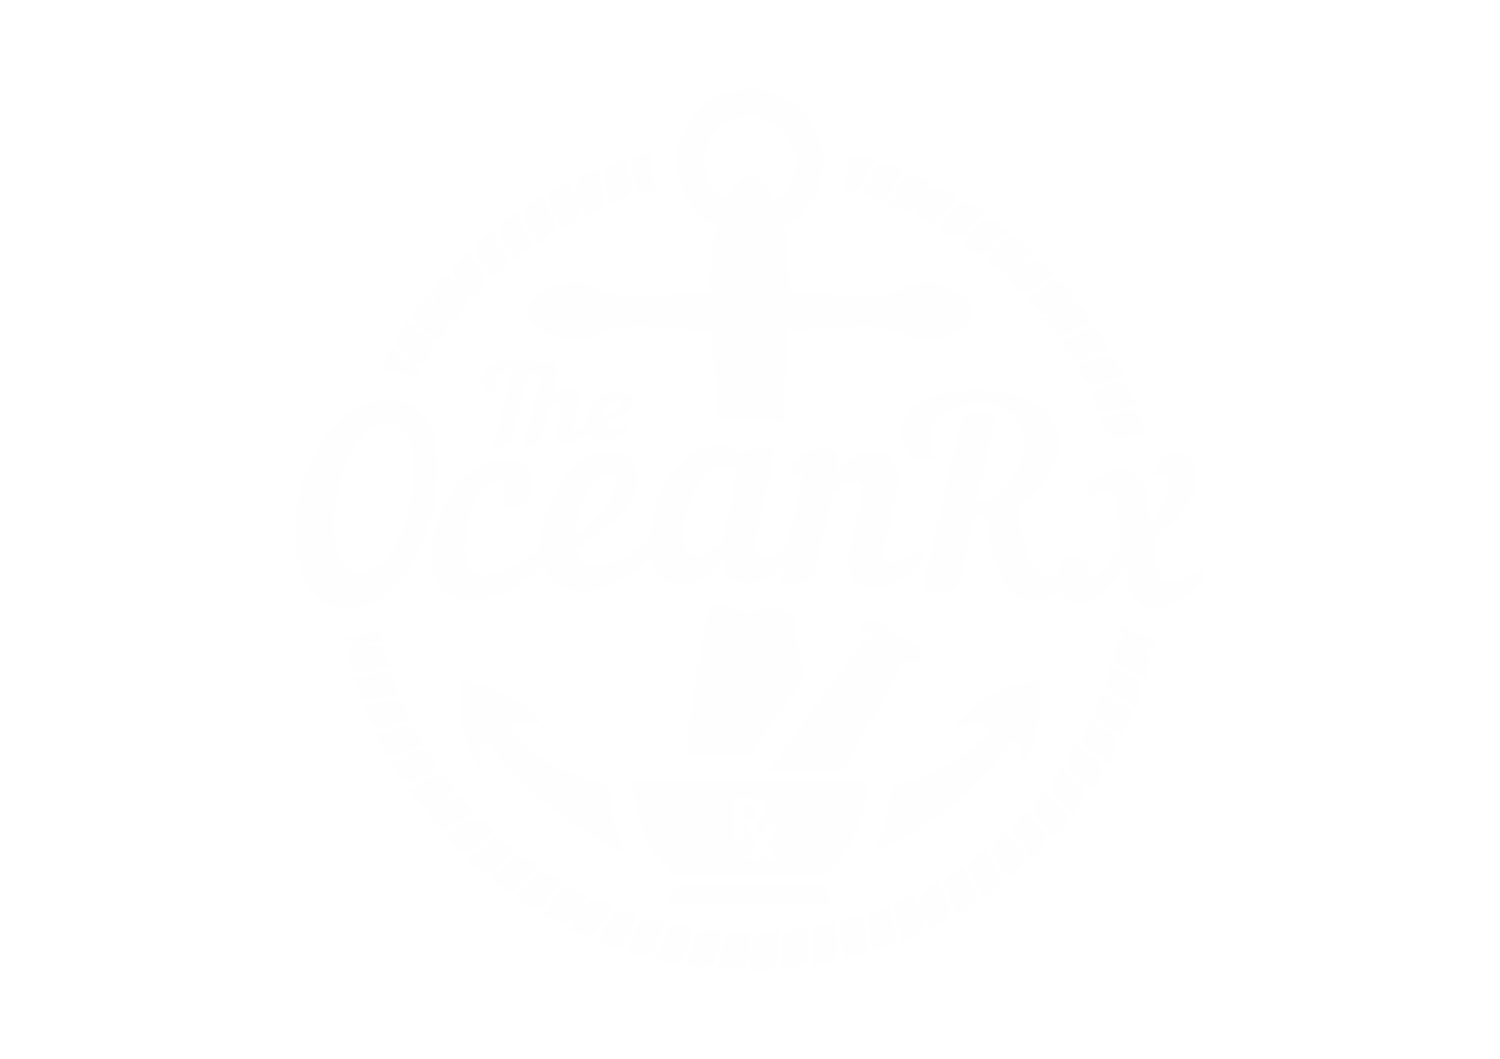 The Ocean Rx